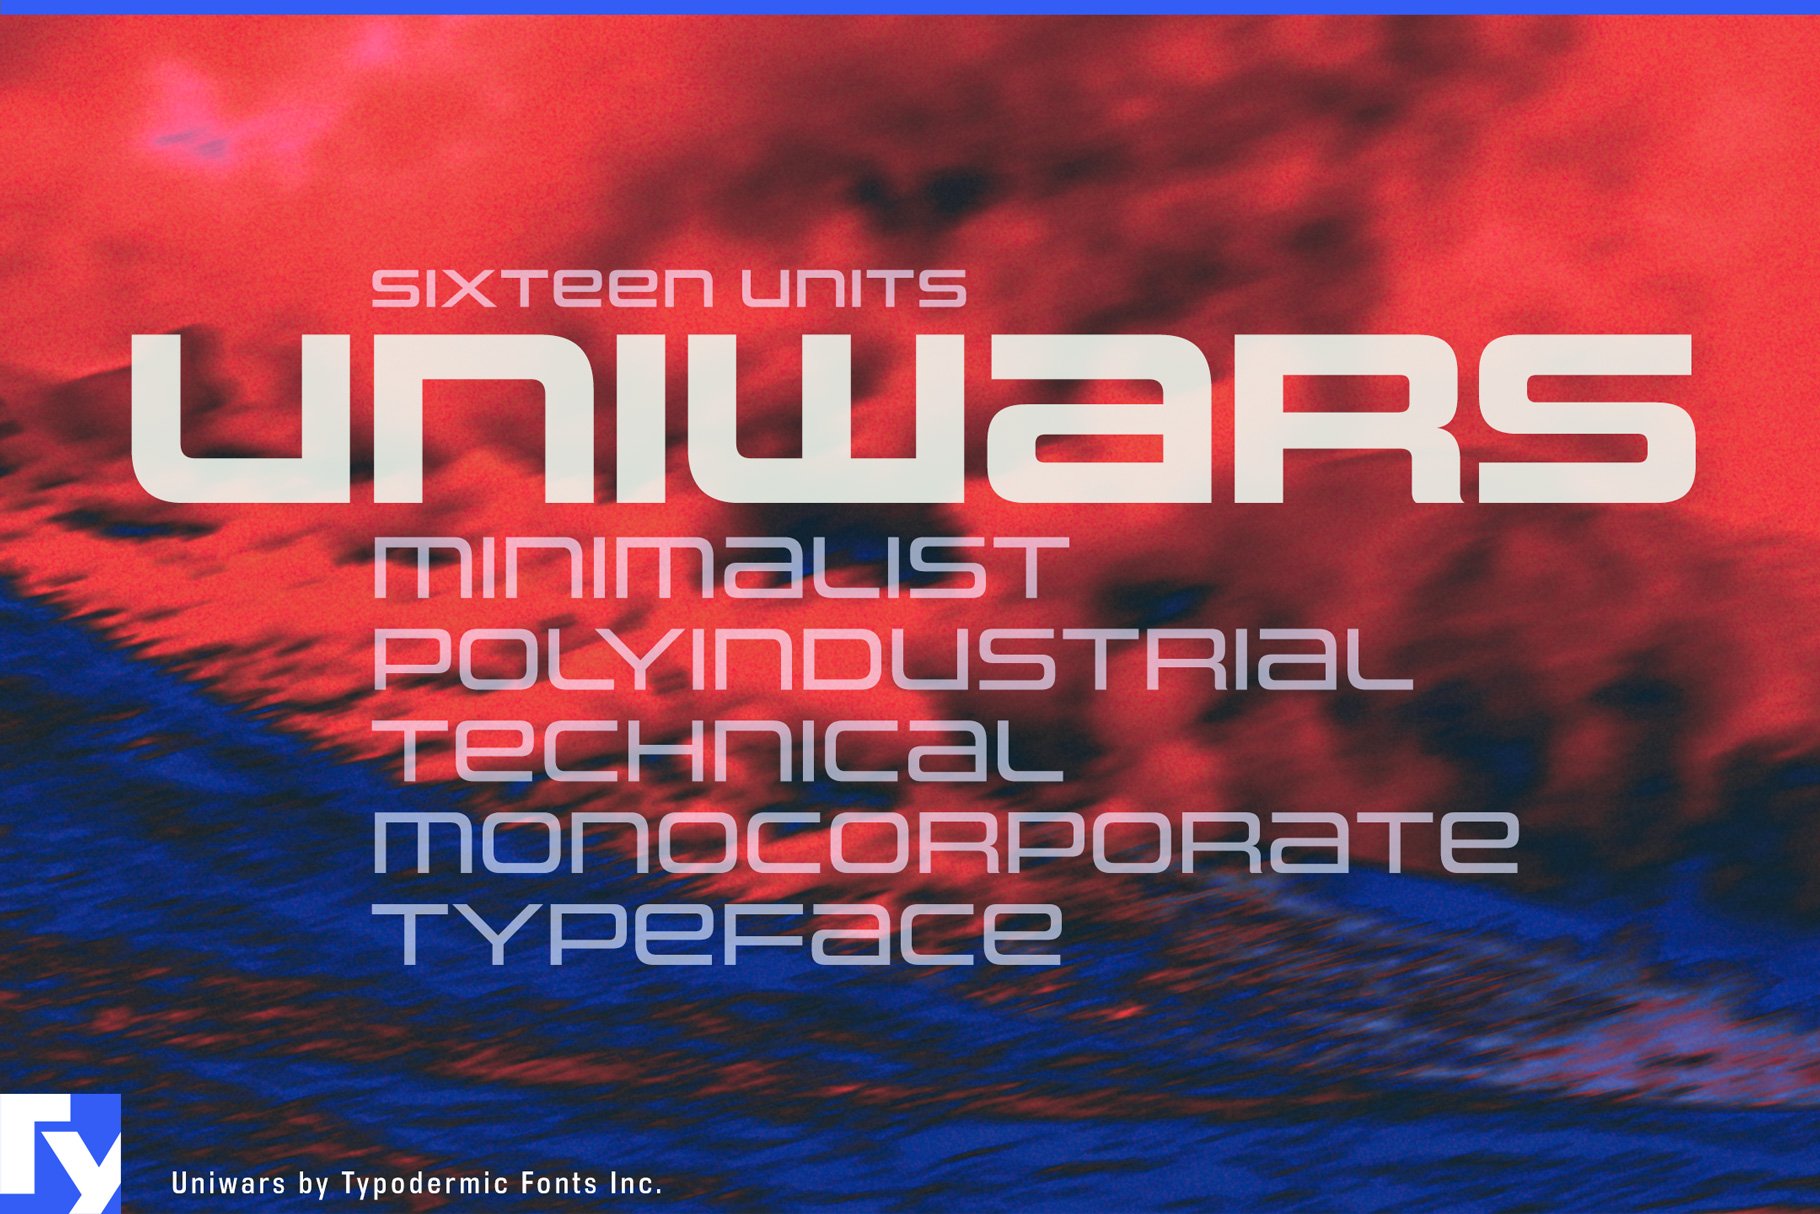 Uniwars cover image.